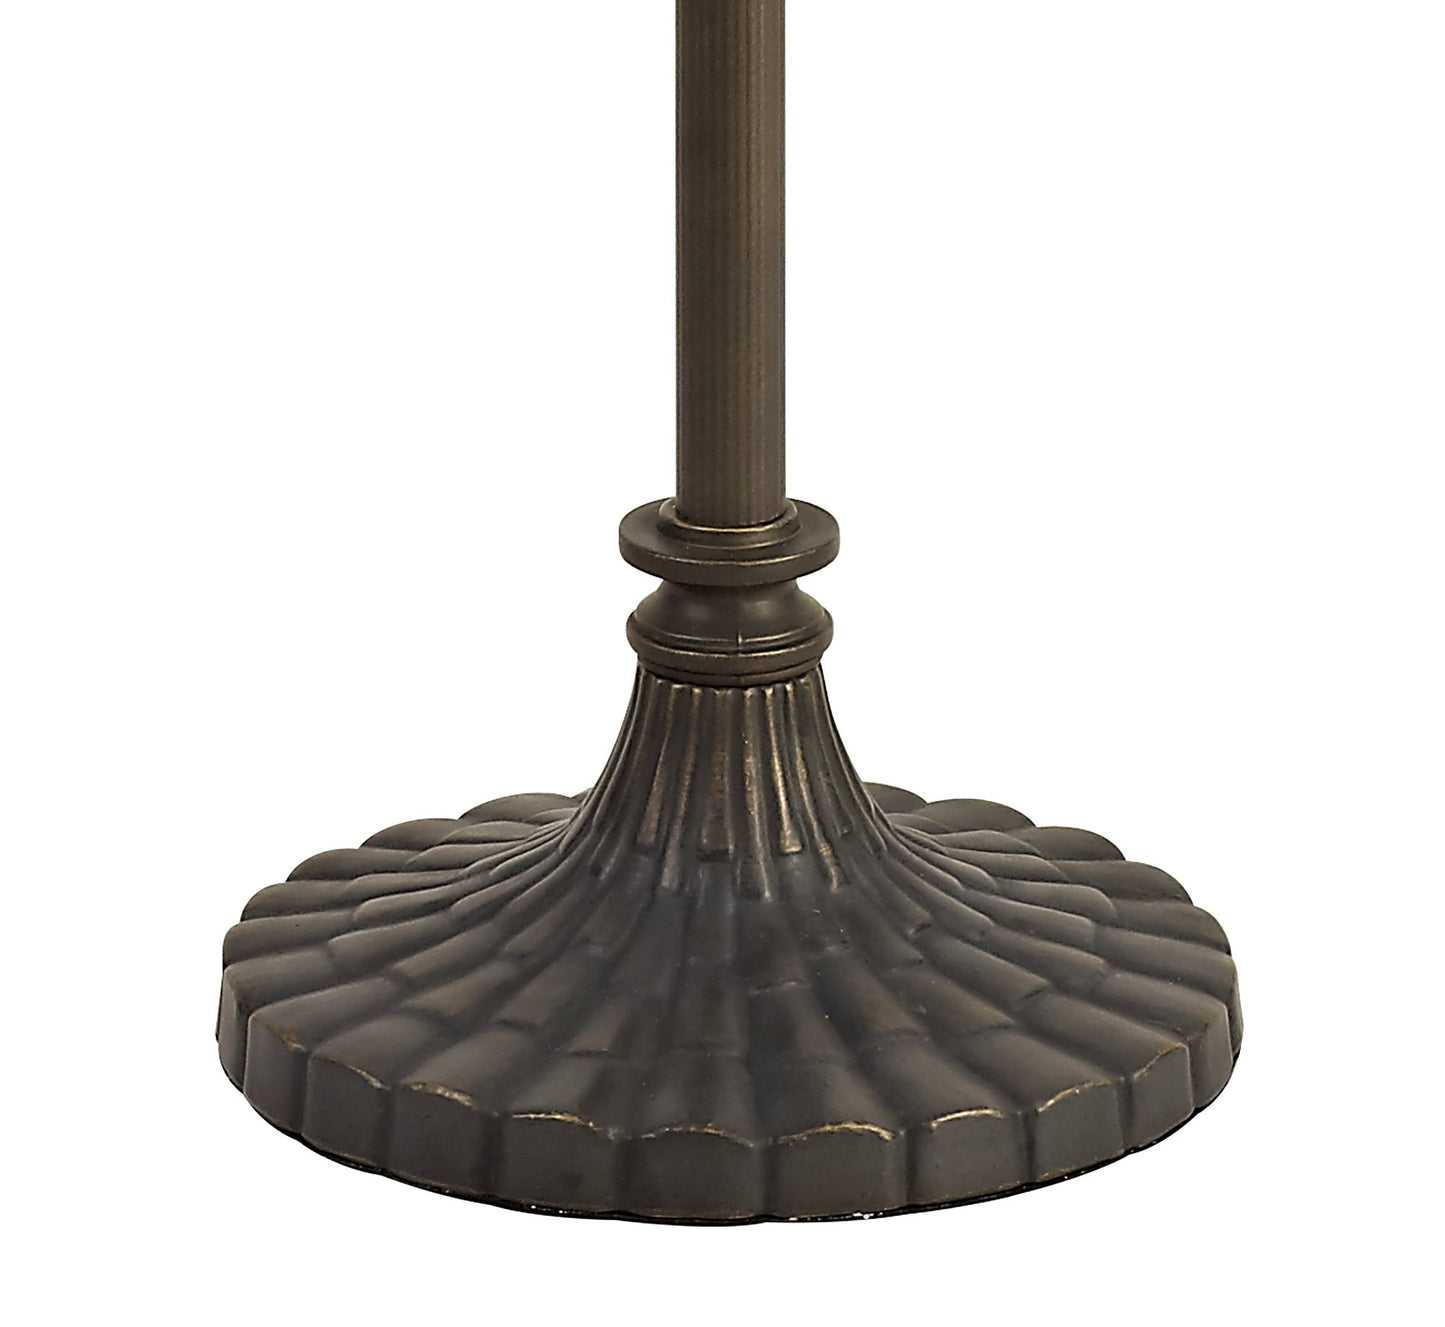 Bronze Floor Lamp - Base Only